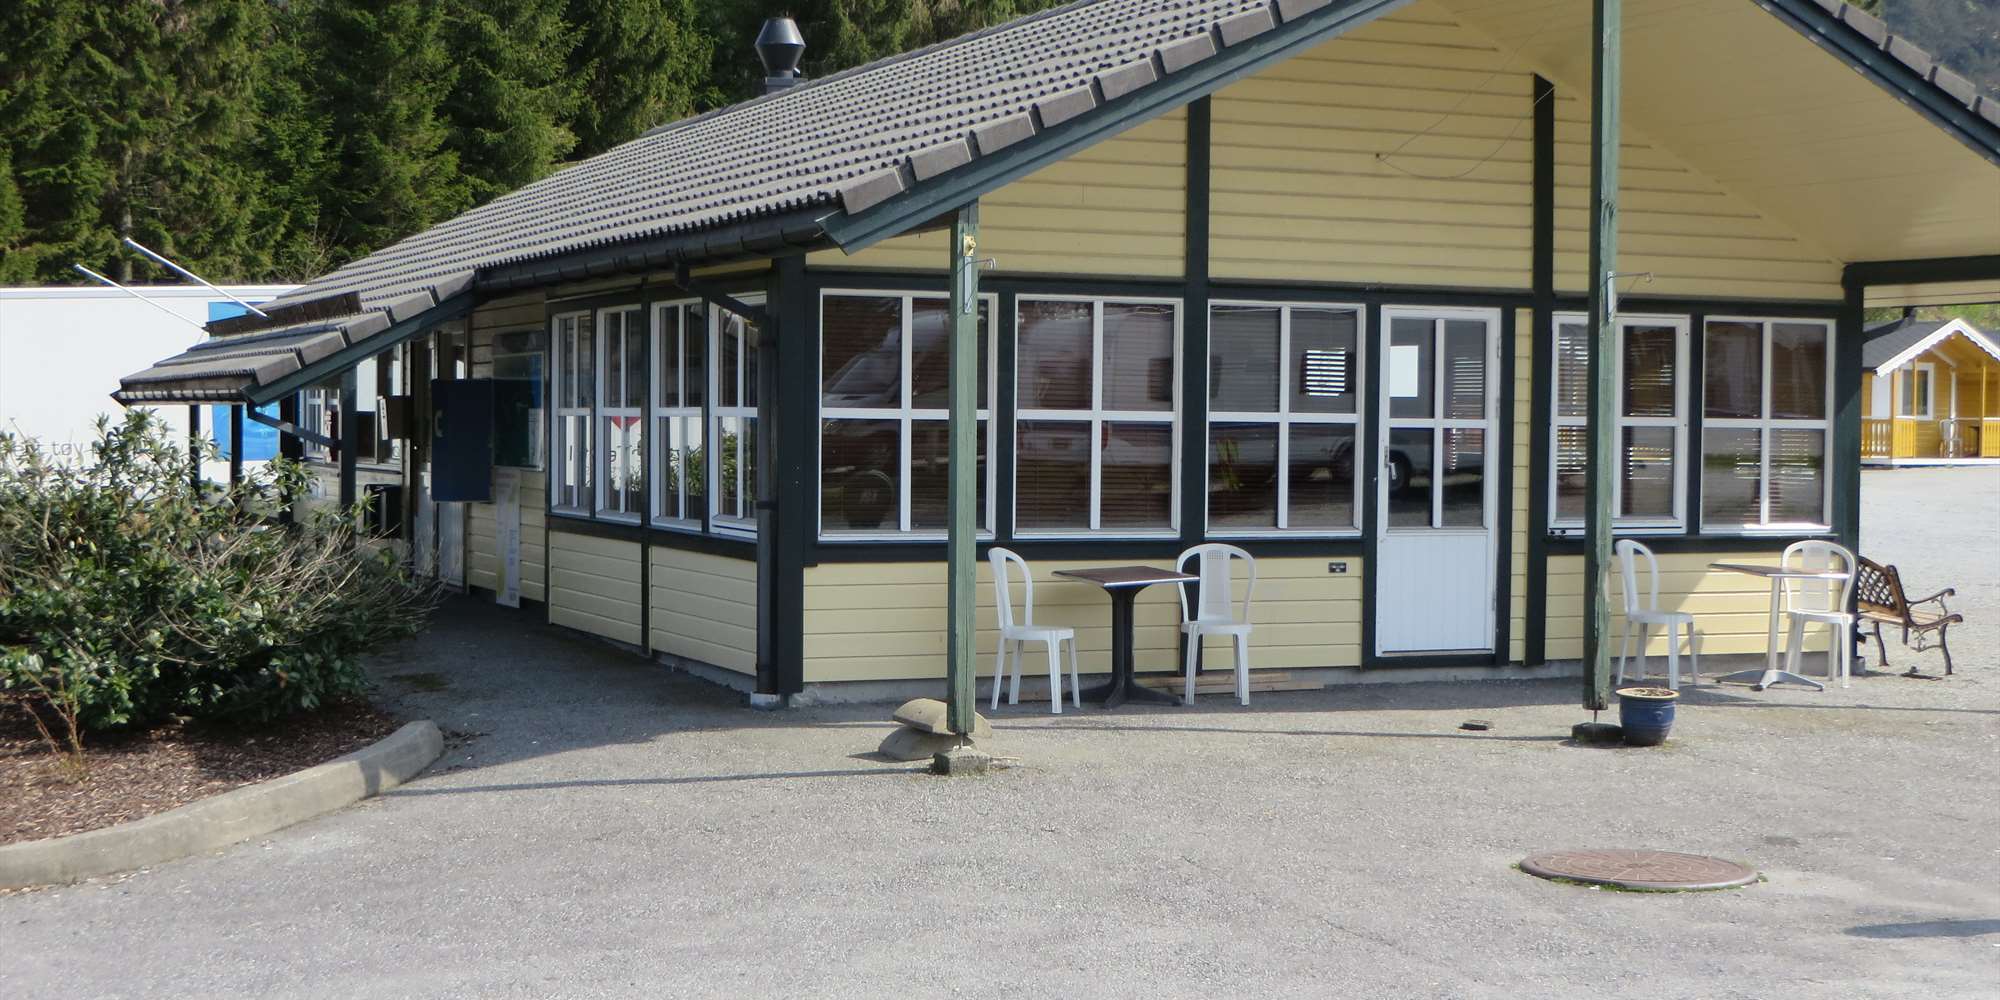 Bergen Camping Park - Reception